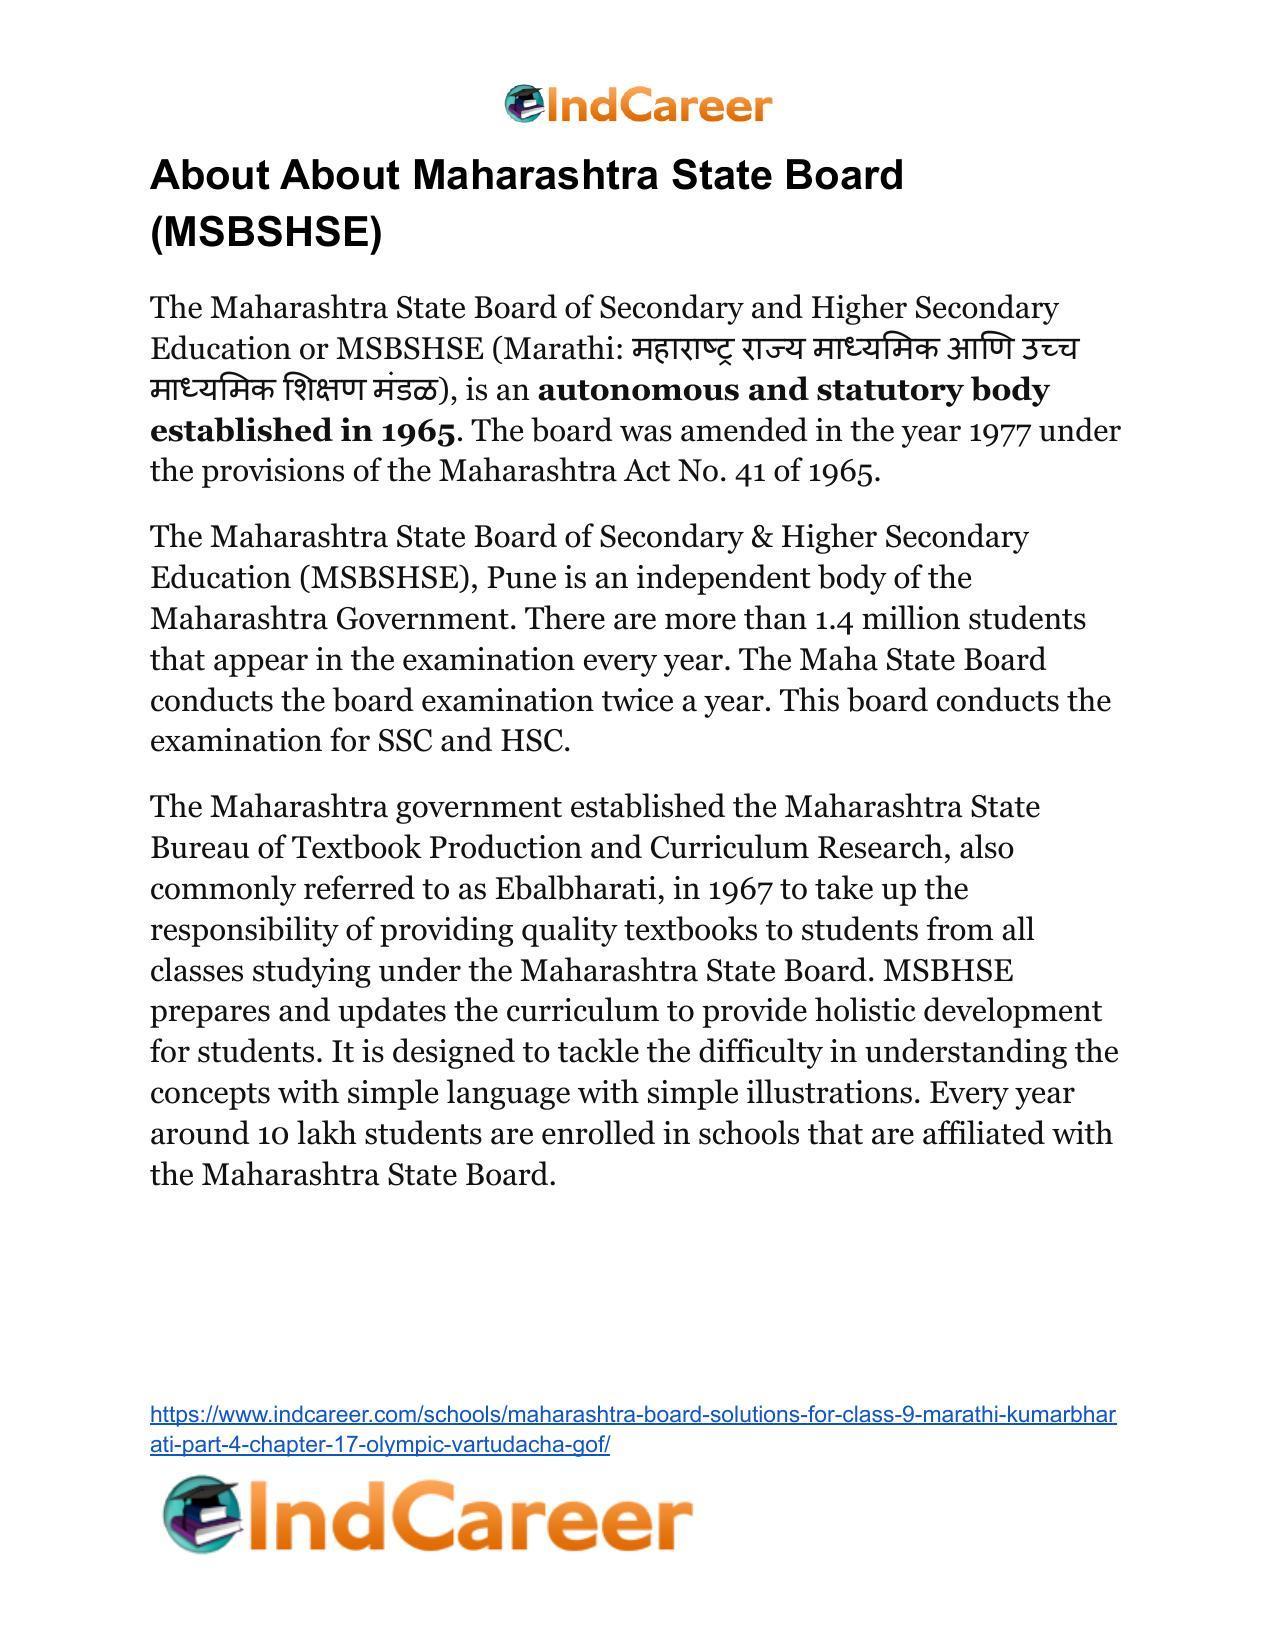 Maharashtra Board Solutions for Class 9- Marathi Kumarbharati (Part- 4): Chapter 17- ऑलिंपिक वर्तुळांचा गोफ - Page 23